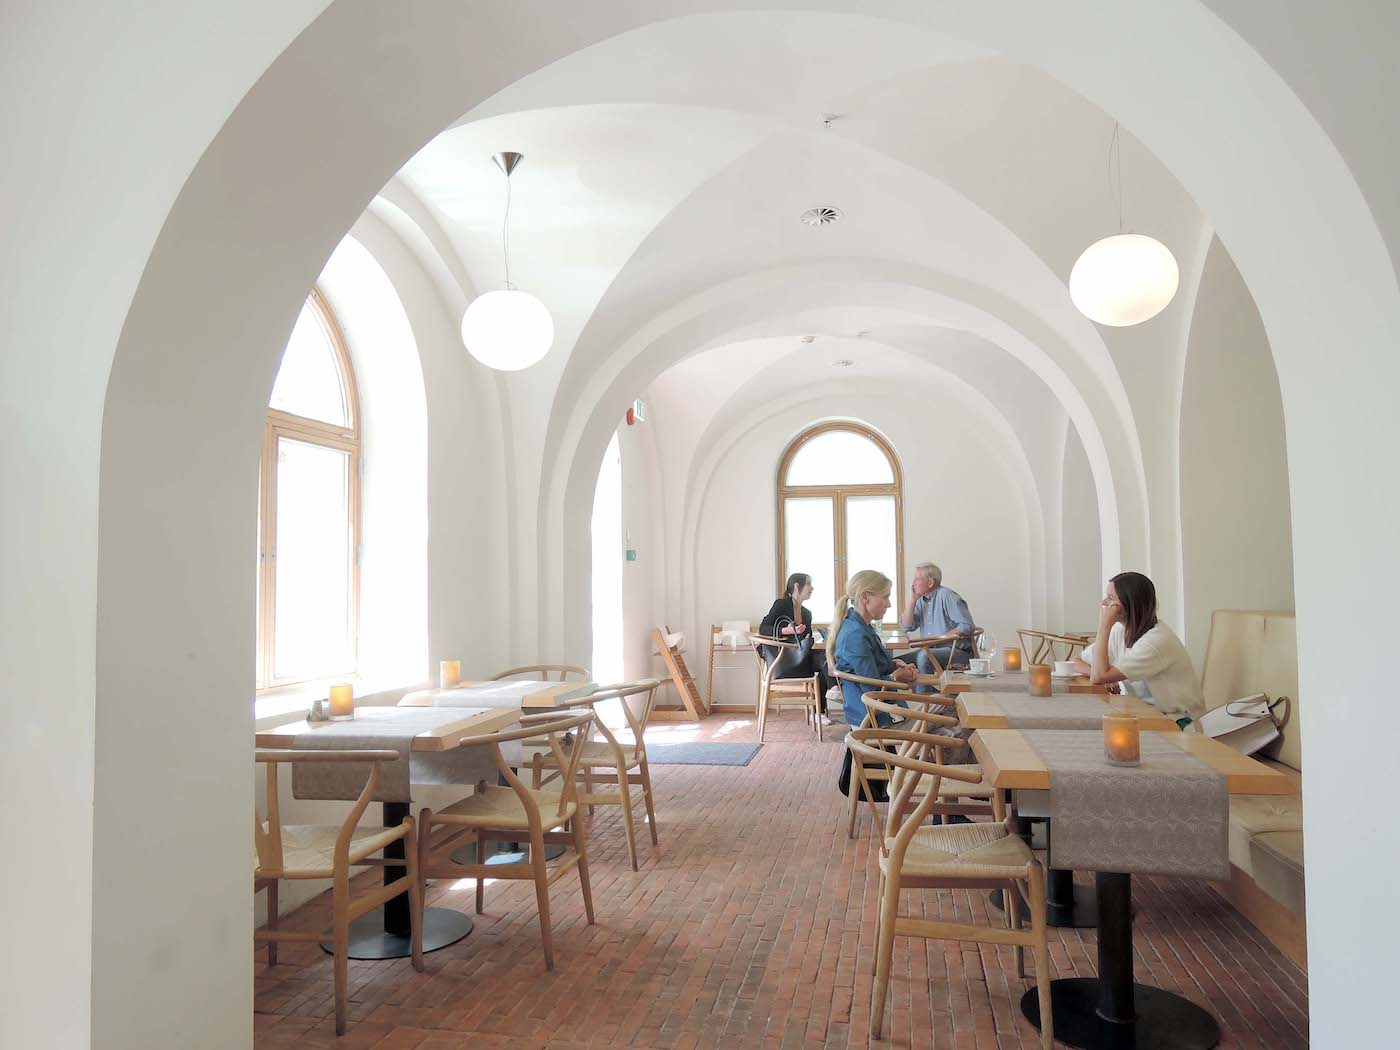 Grosch Cafe by Sverre Fehn, Oslo. Photo by Mette Aamodt. 